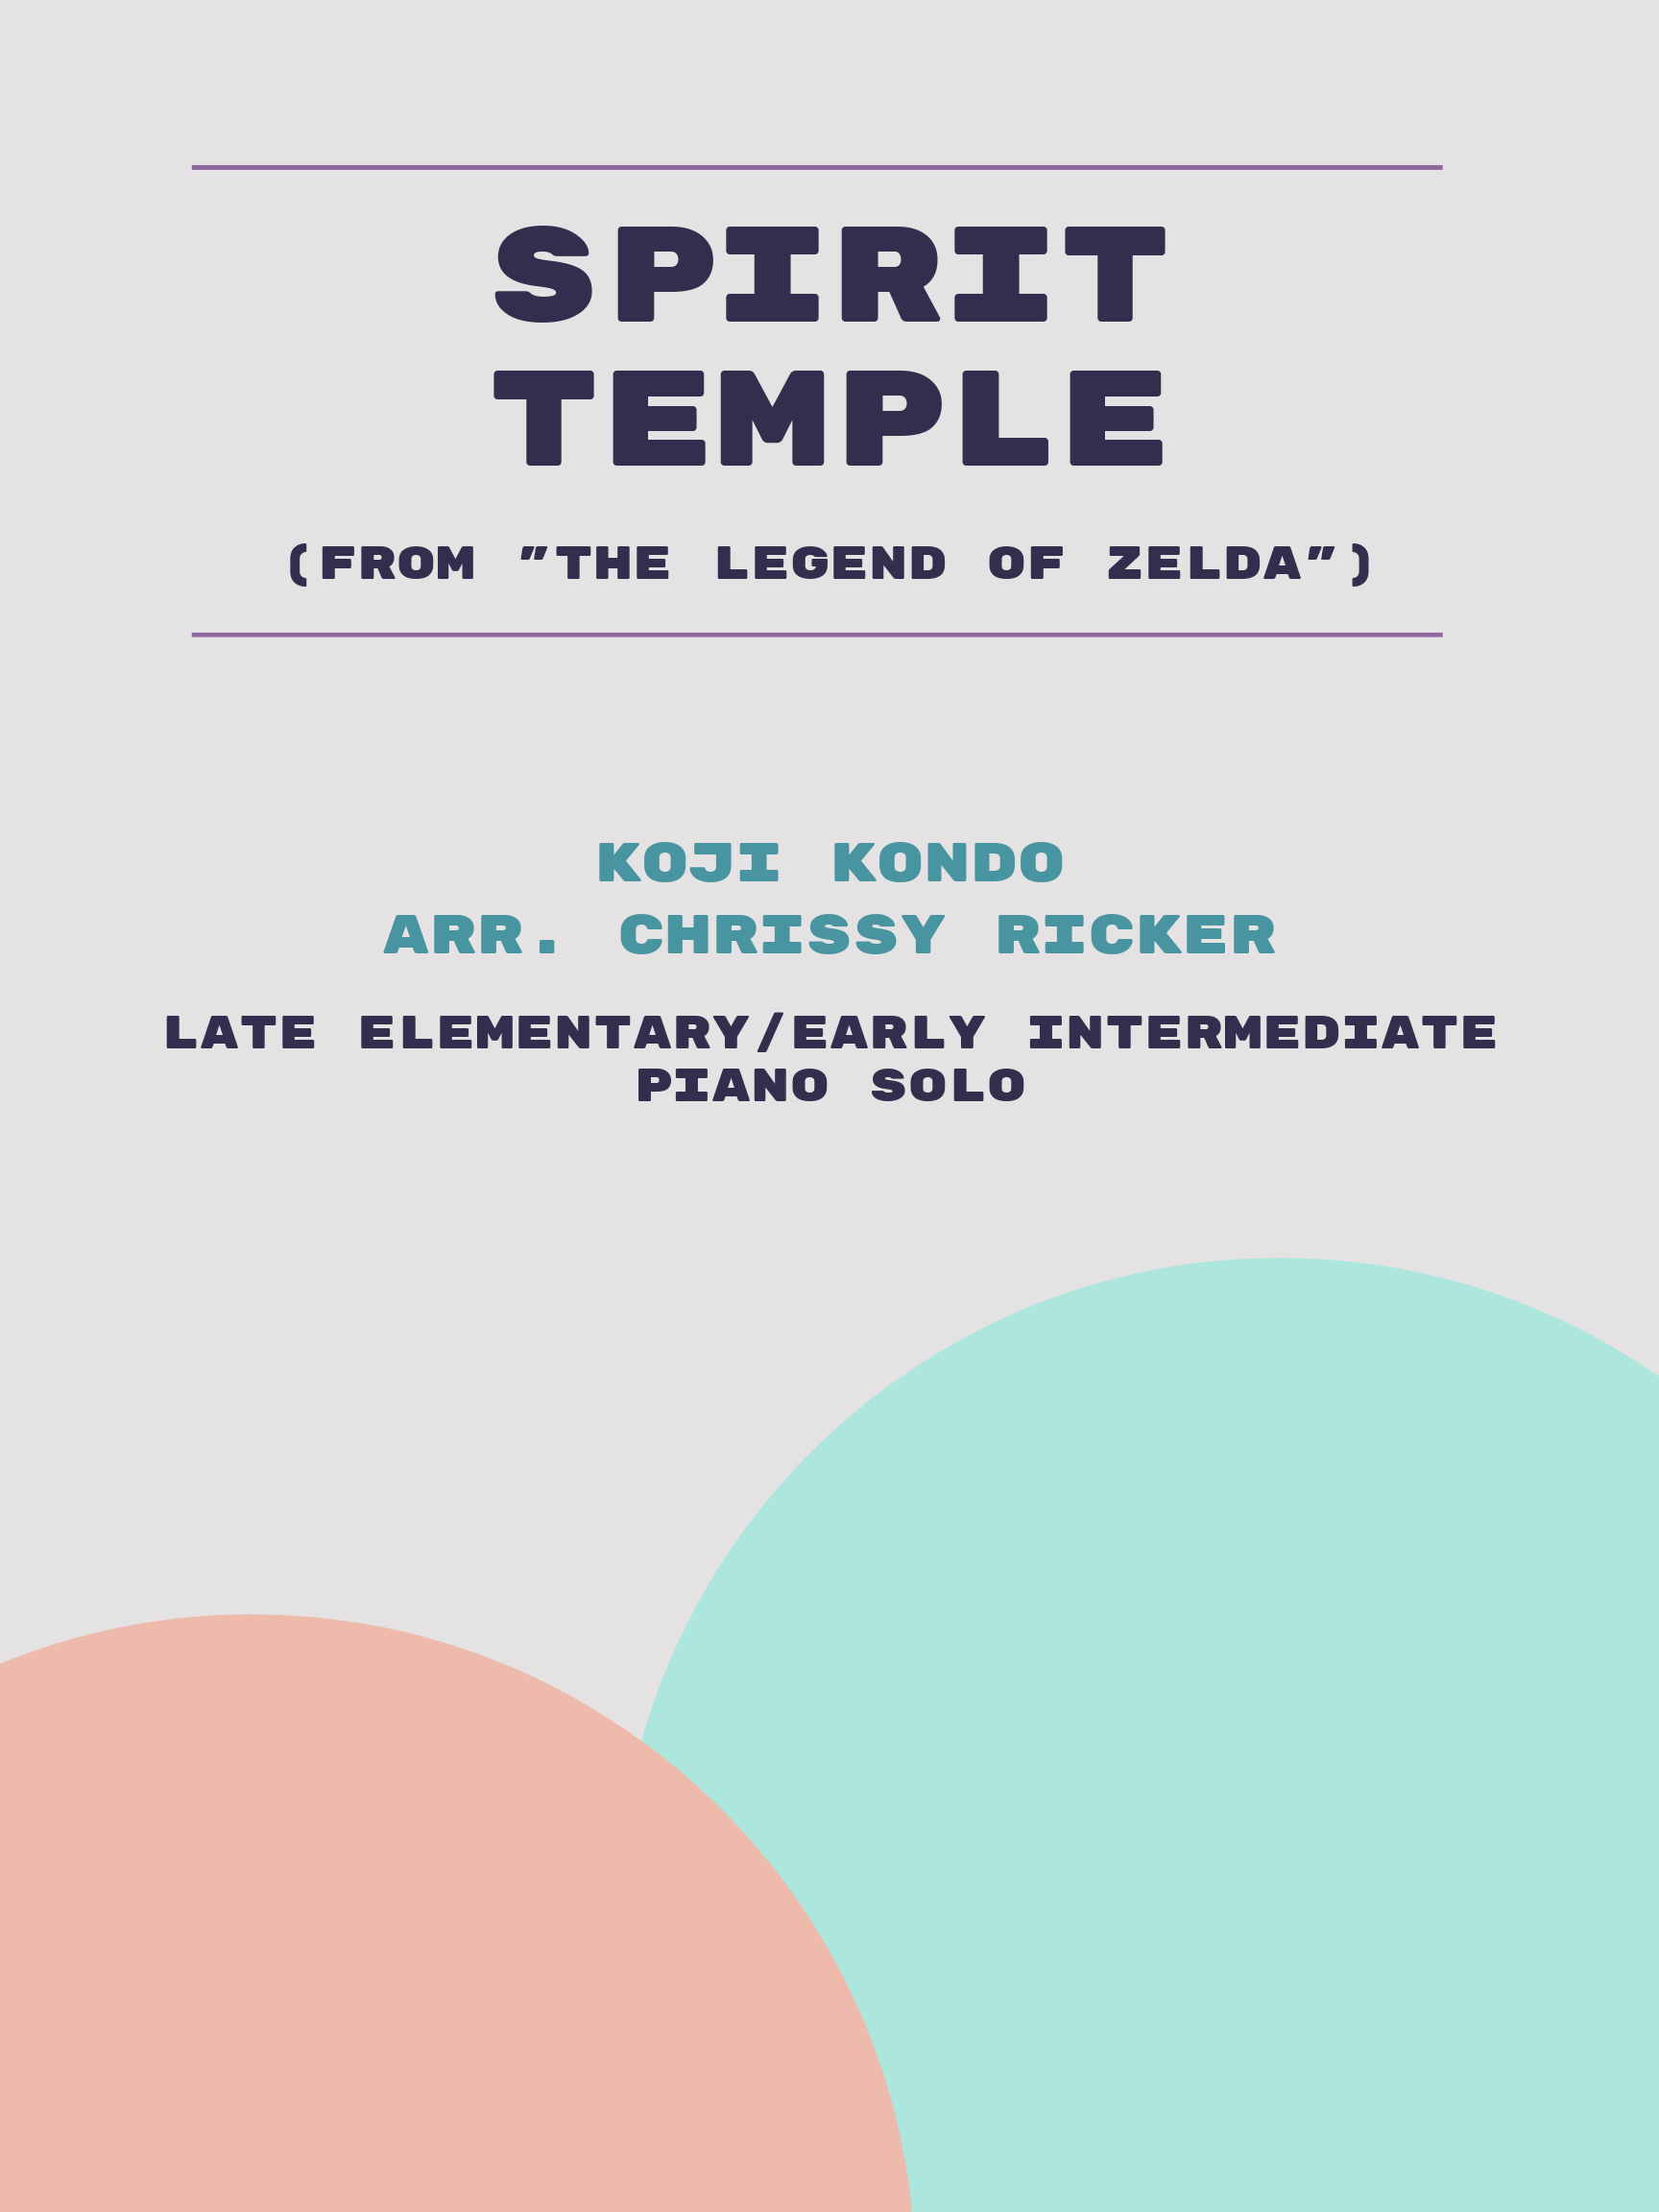 Spirit Temple by Koji Kondo